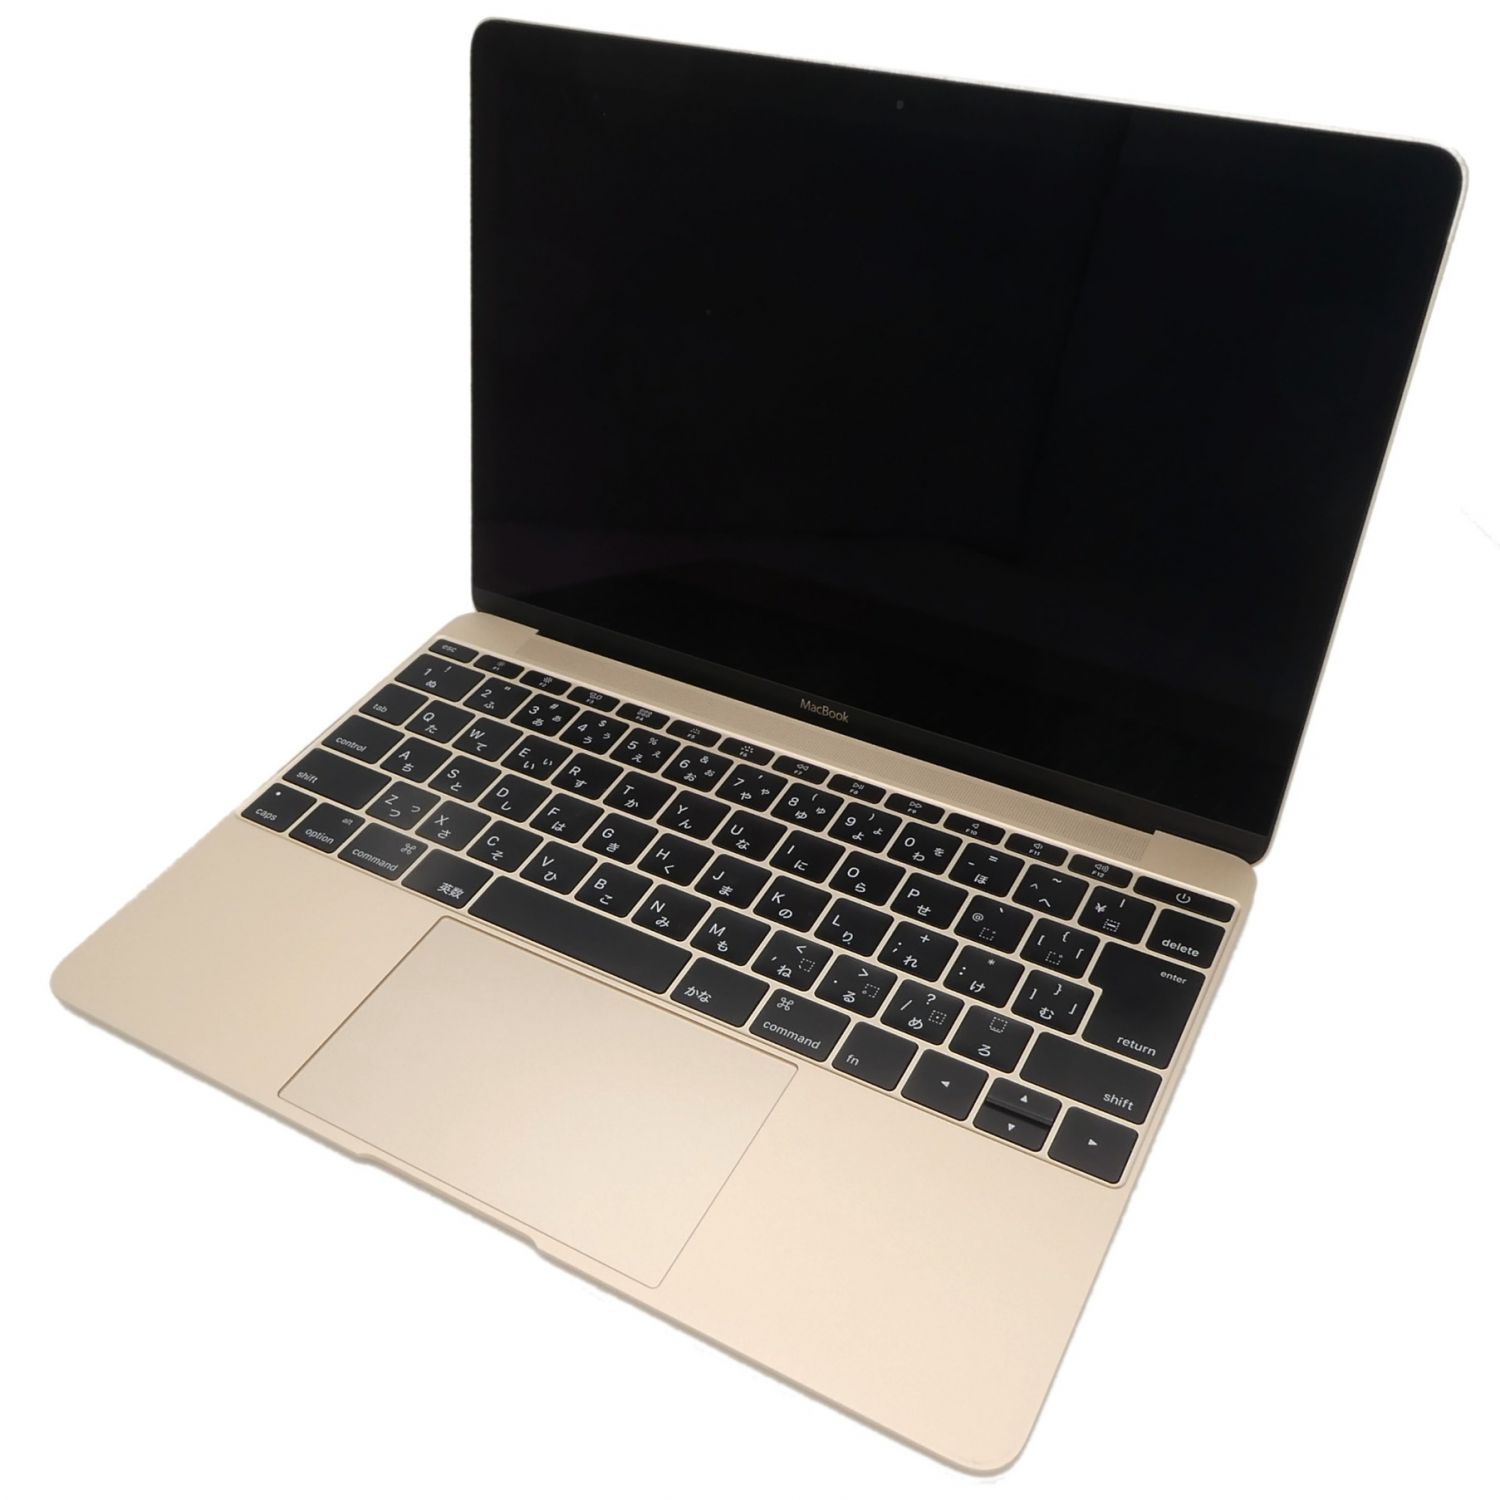 AppleApple MacBook 12インチRetina A1534 ゴールド軽量美品